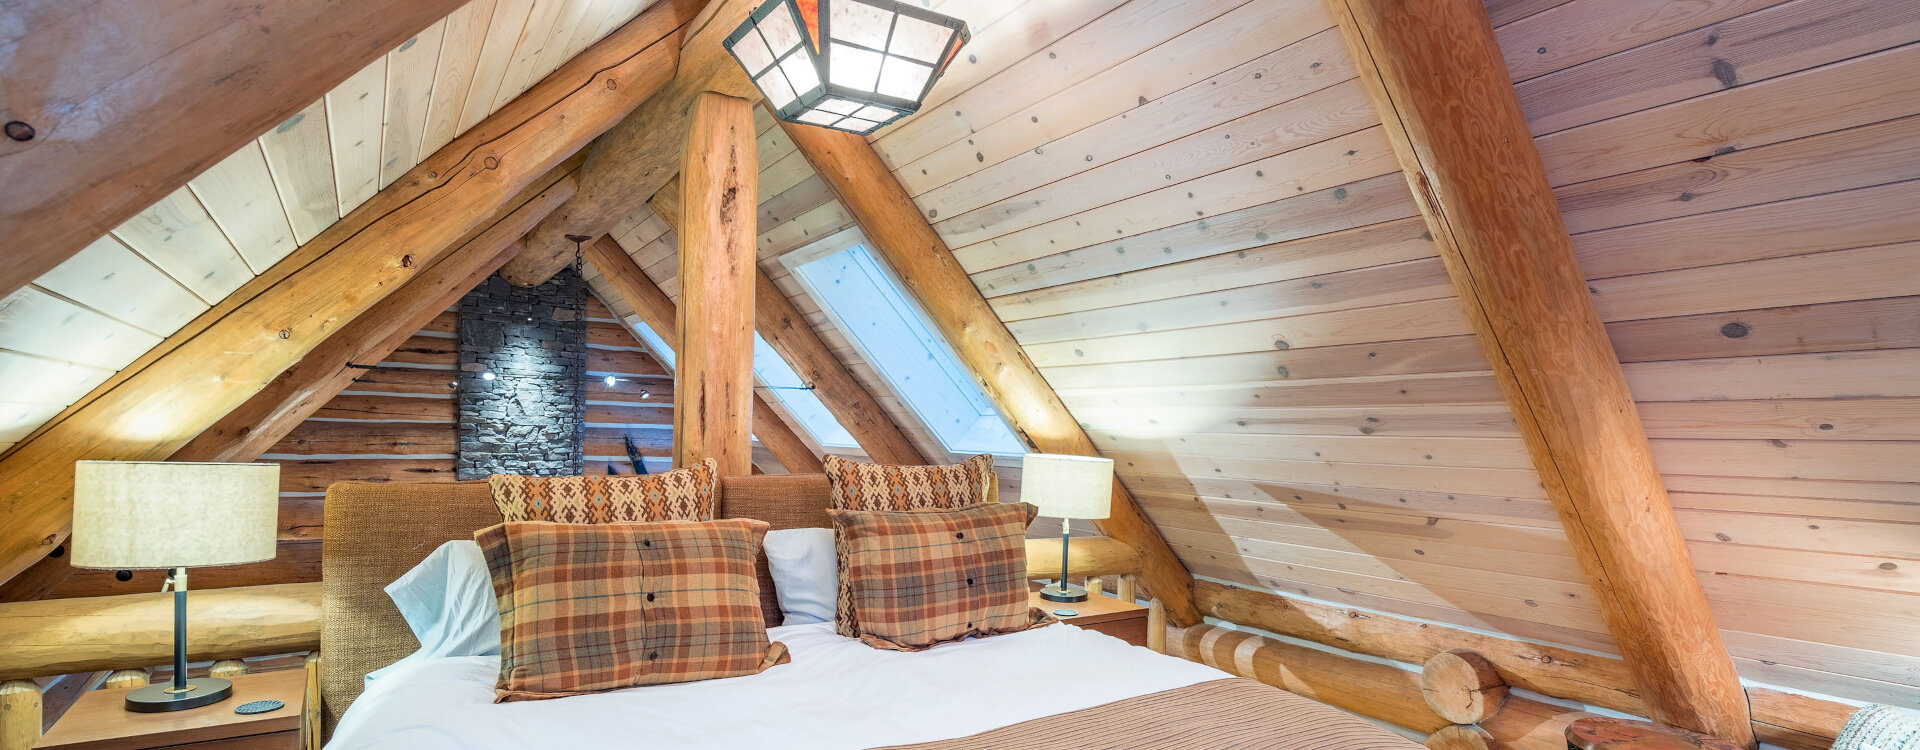 13-Telluride-Yellow-Brick-Cabin-Loft-Bedroom-King